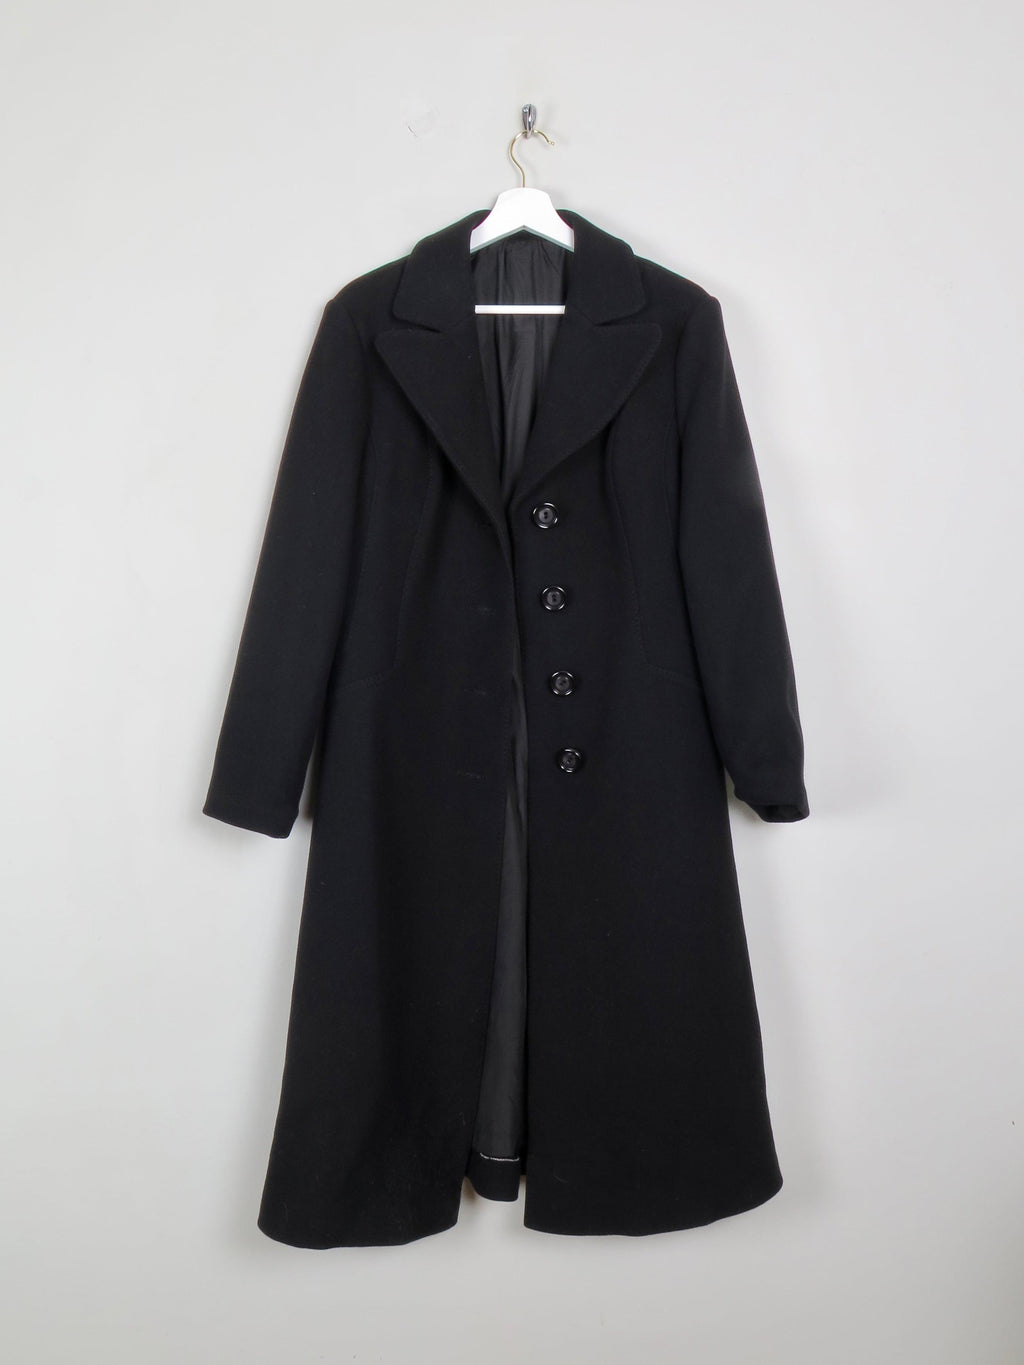 Women's Black Wool 1970s Coat 12/14 - The Harlequin